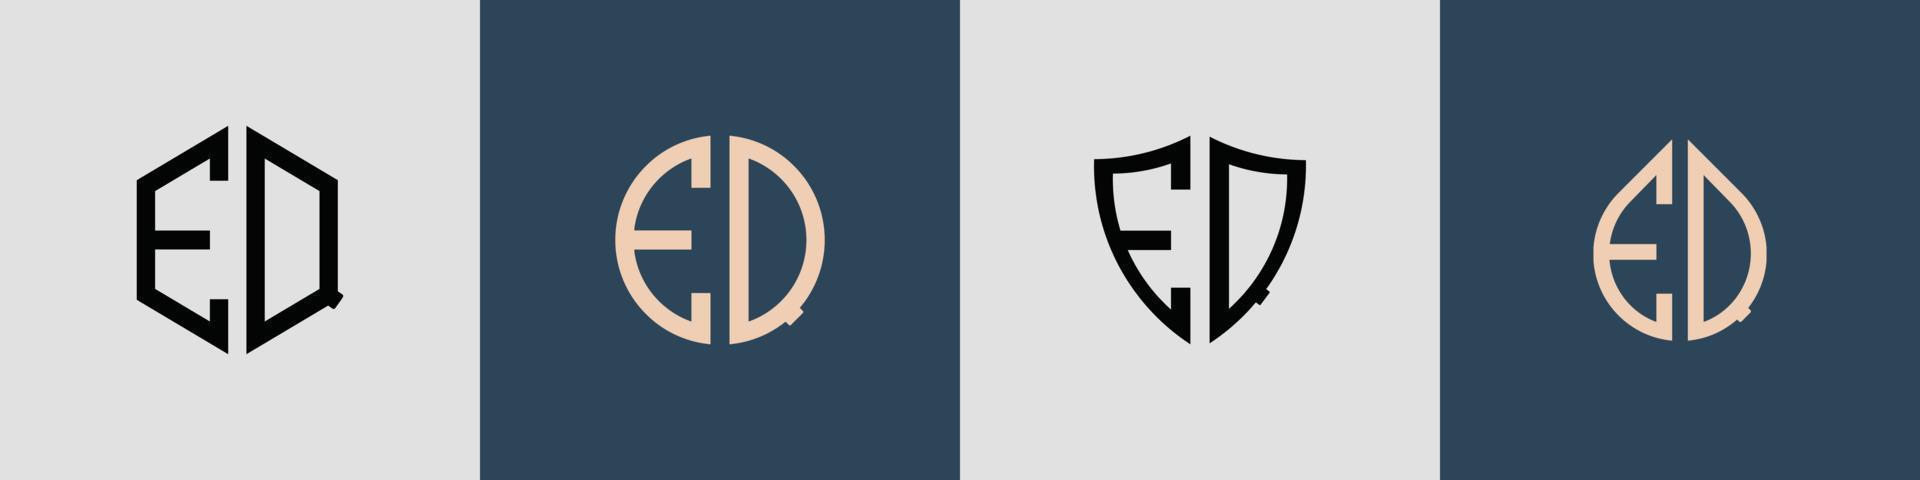 Creative simple Initial Letters EQ Logo Designs Bundle. vector